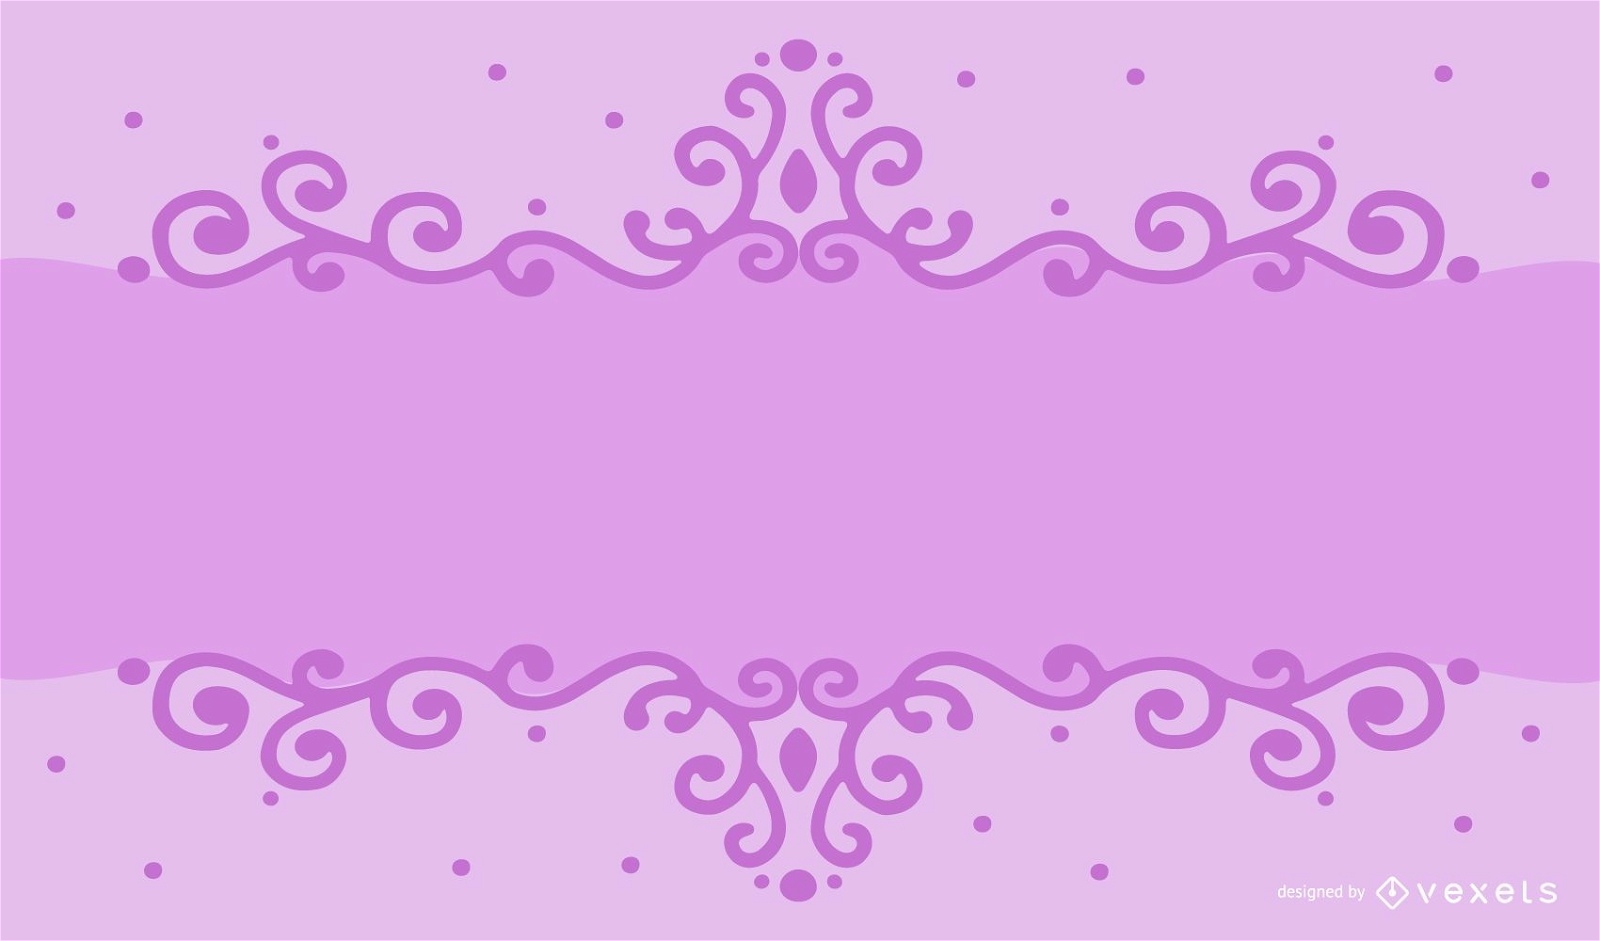 Banner de remolino colorido en azul naranja púrpura